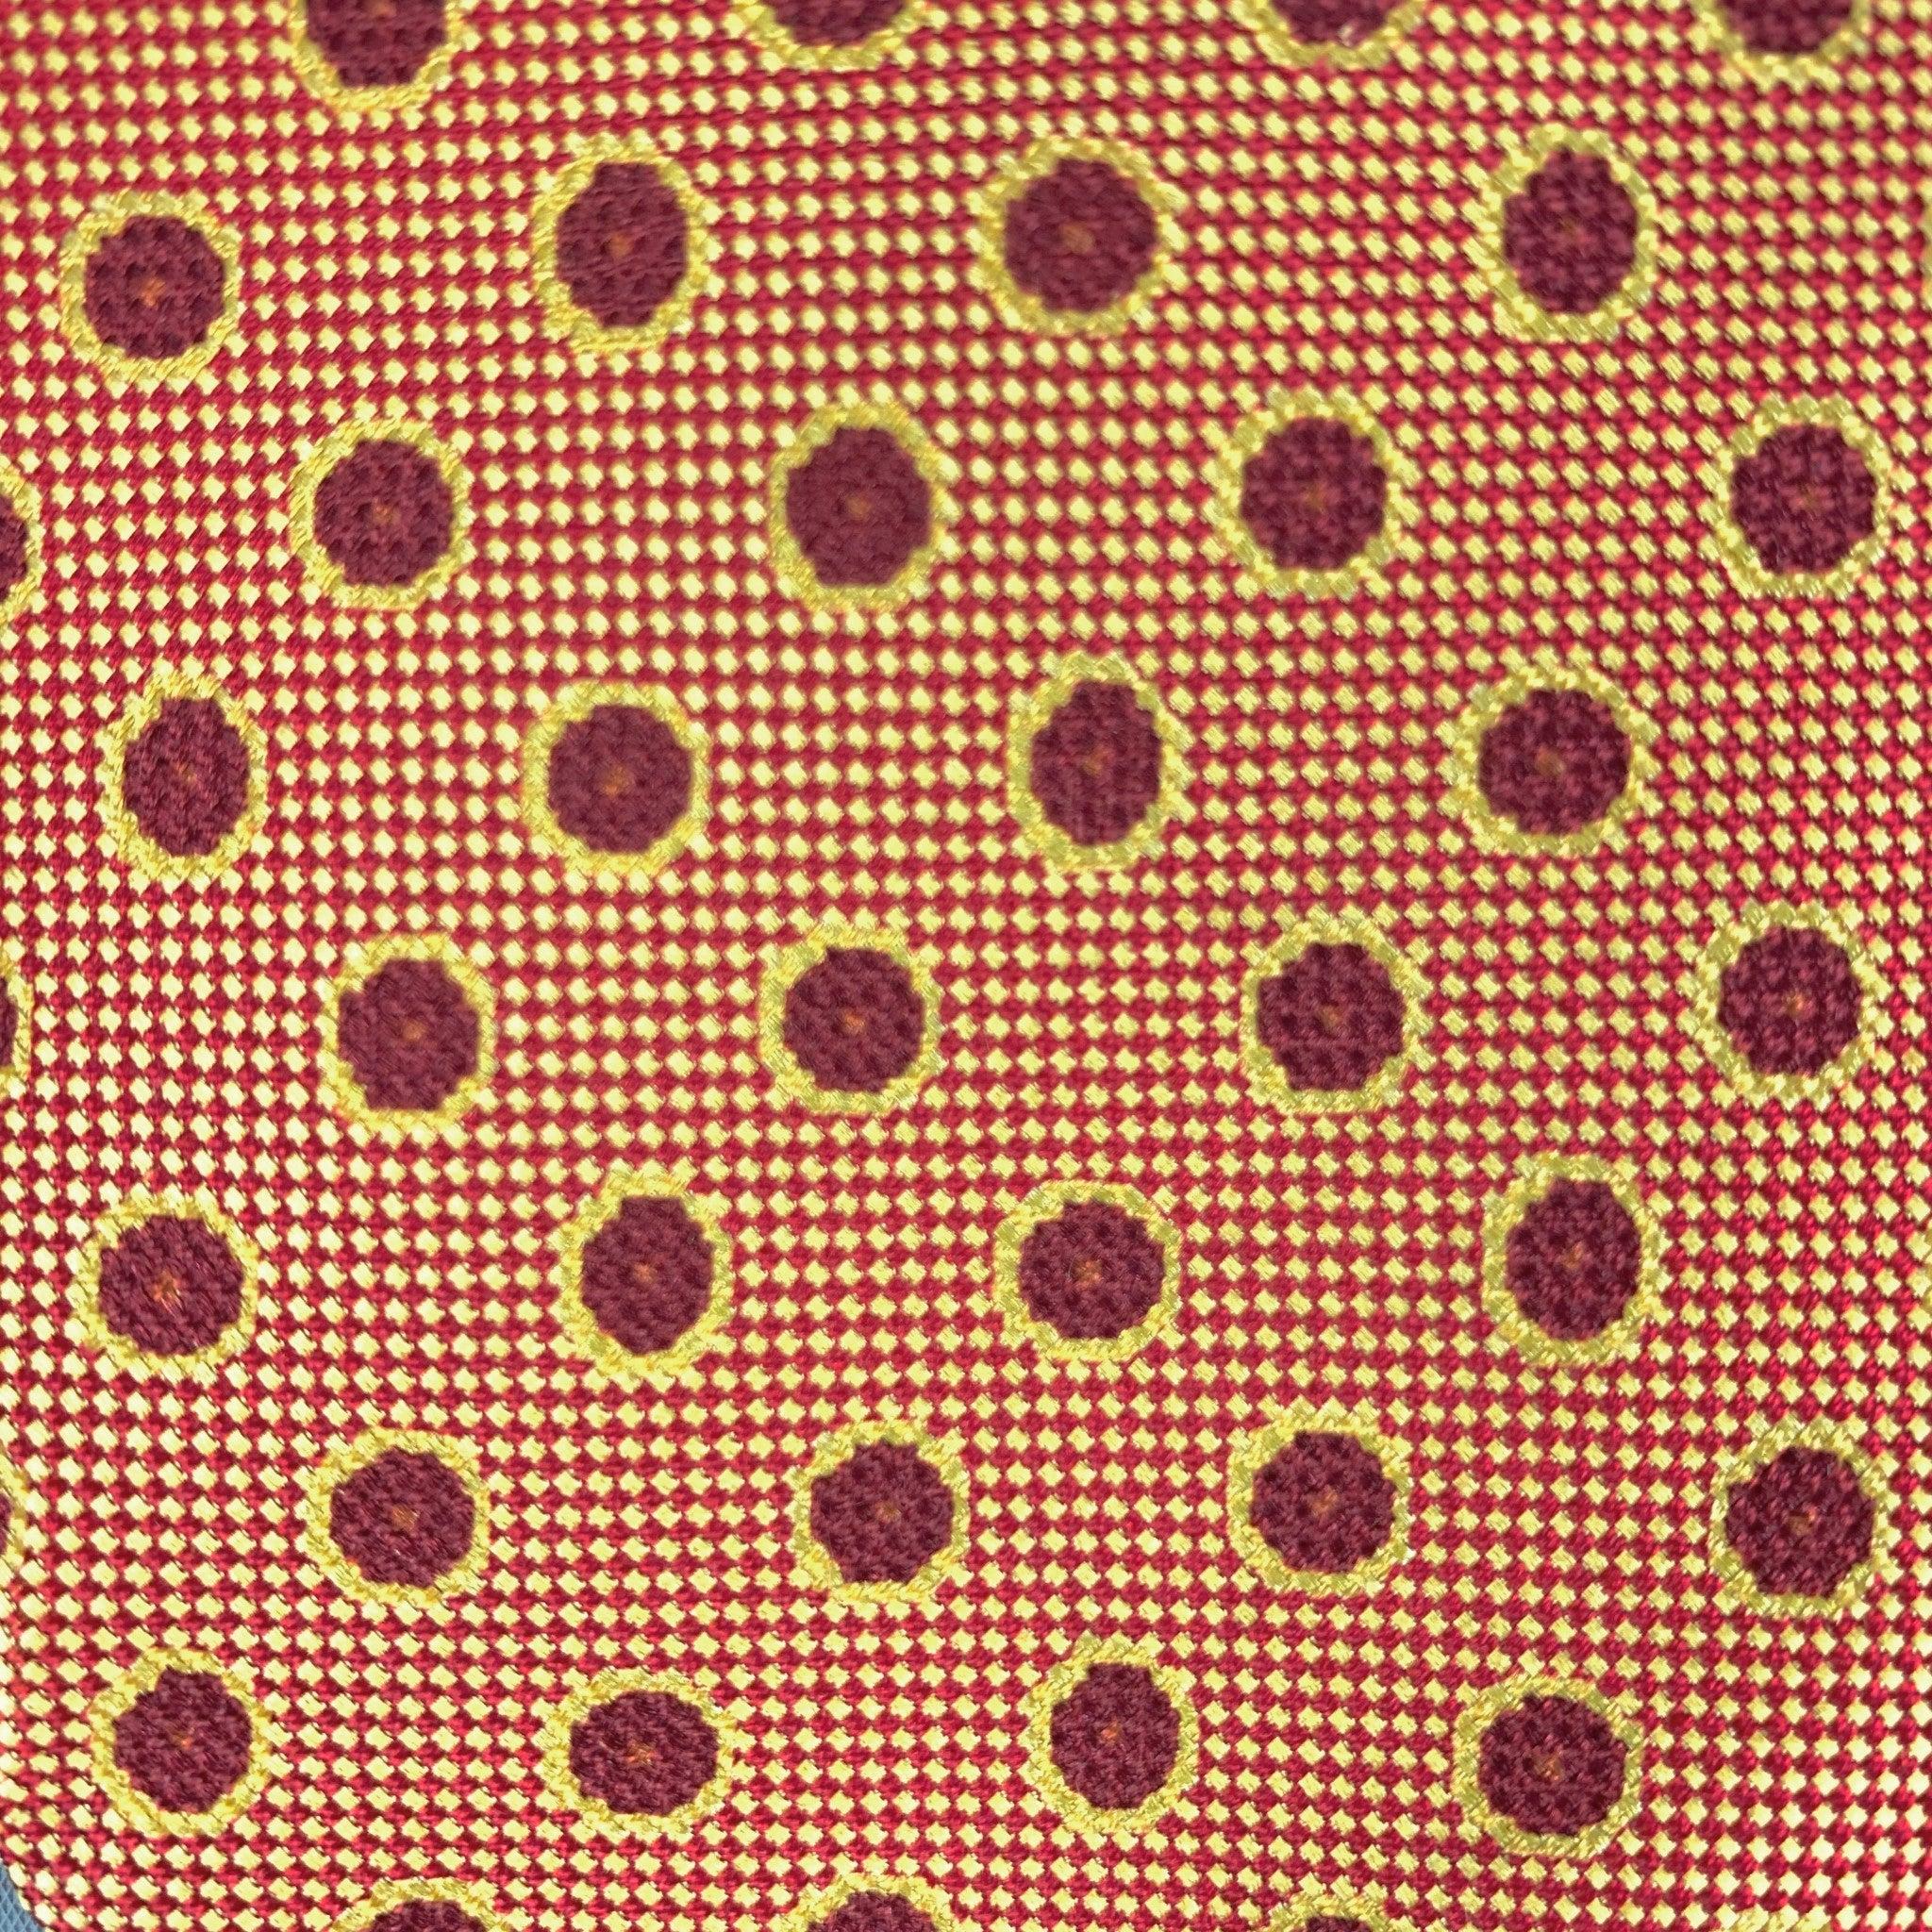 ERMENEGILDO ZEGNA Red & Yellow Dots Silk Tie In Good Condition For Sale In San Francisco, CA